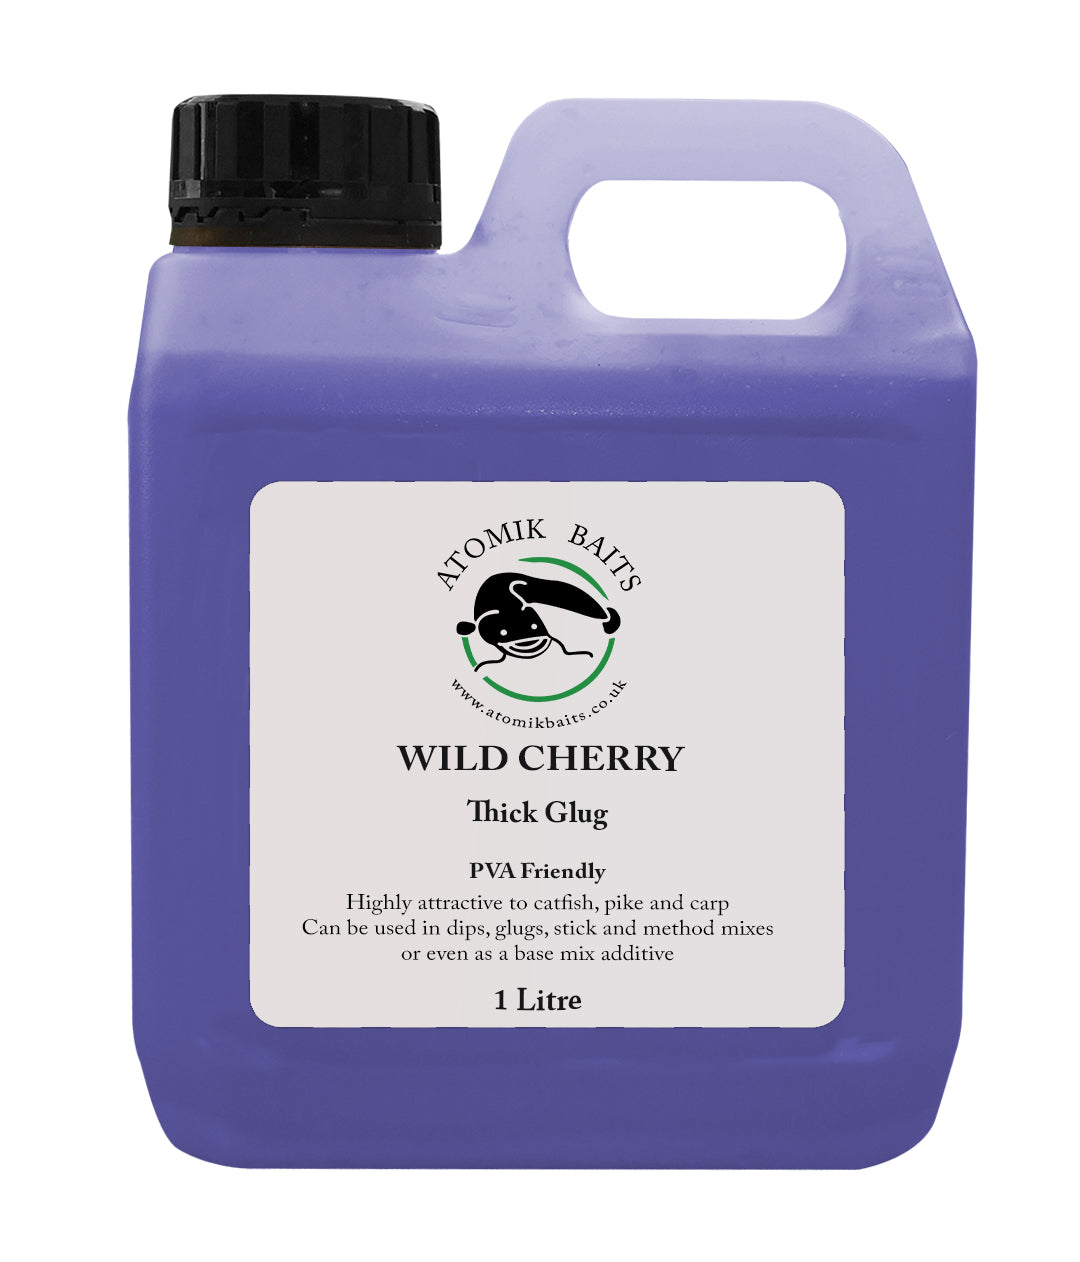 Wild Cherry - Glug, Particle Feed, Liquid Additive, Dip -1 Litre 1000ml